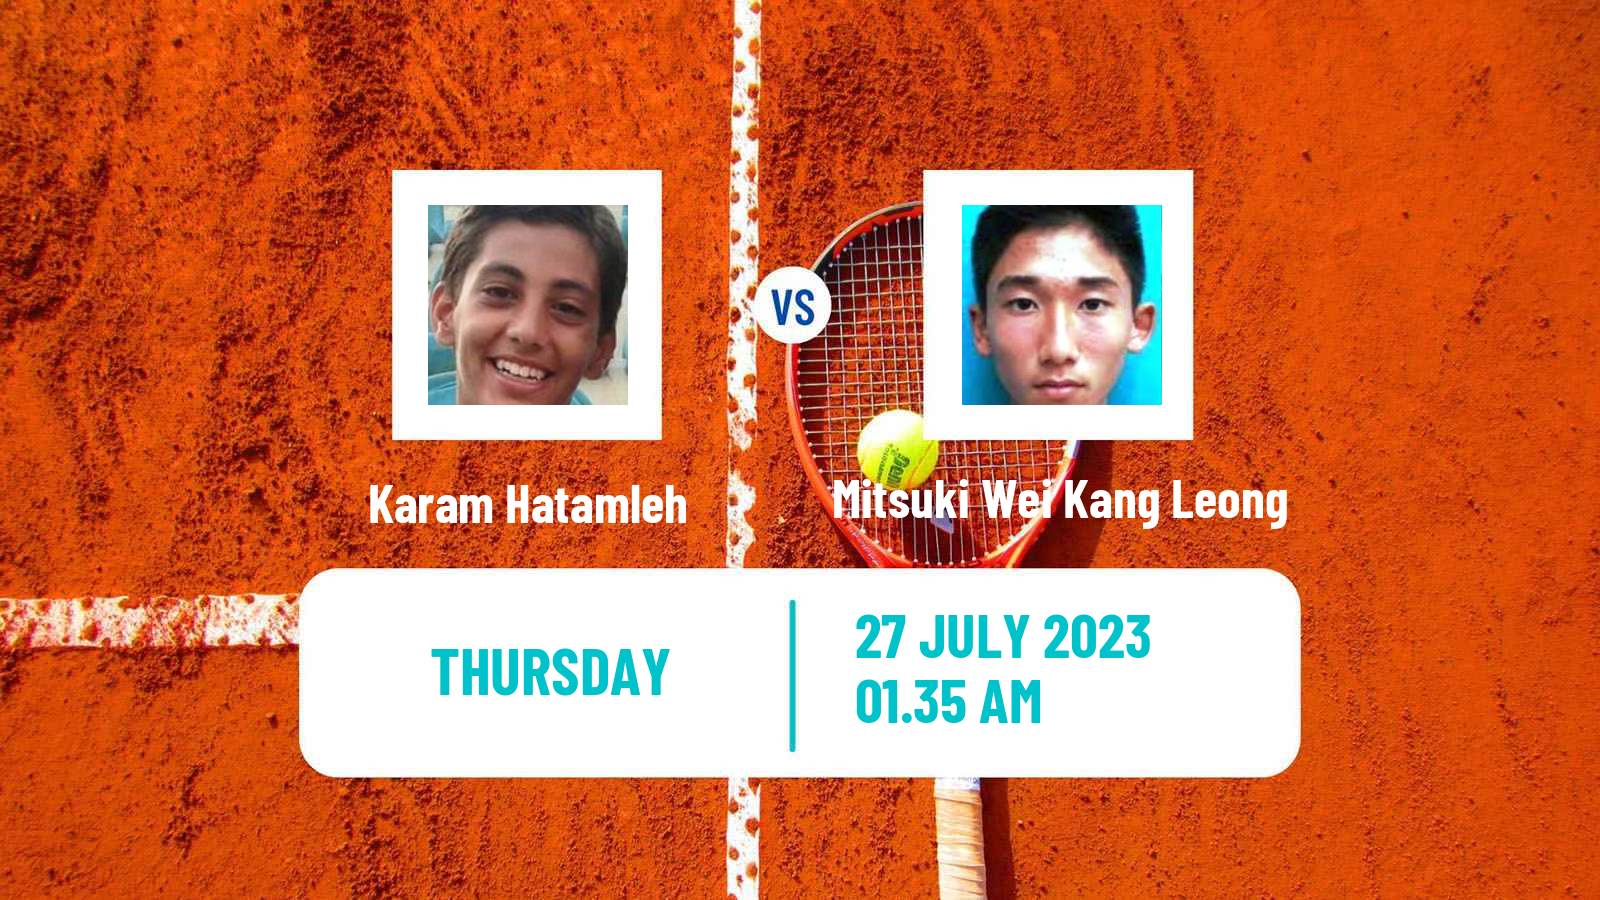 Tennis Davis Cup Group III Karam Hatamleh - Mitsuki Wei Kang Leong